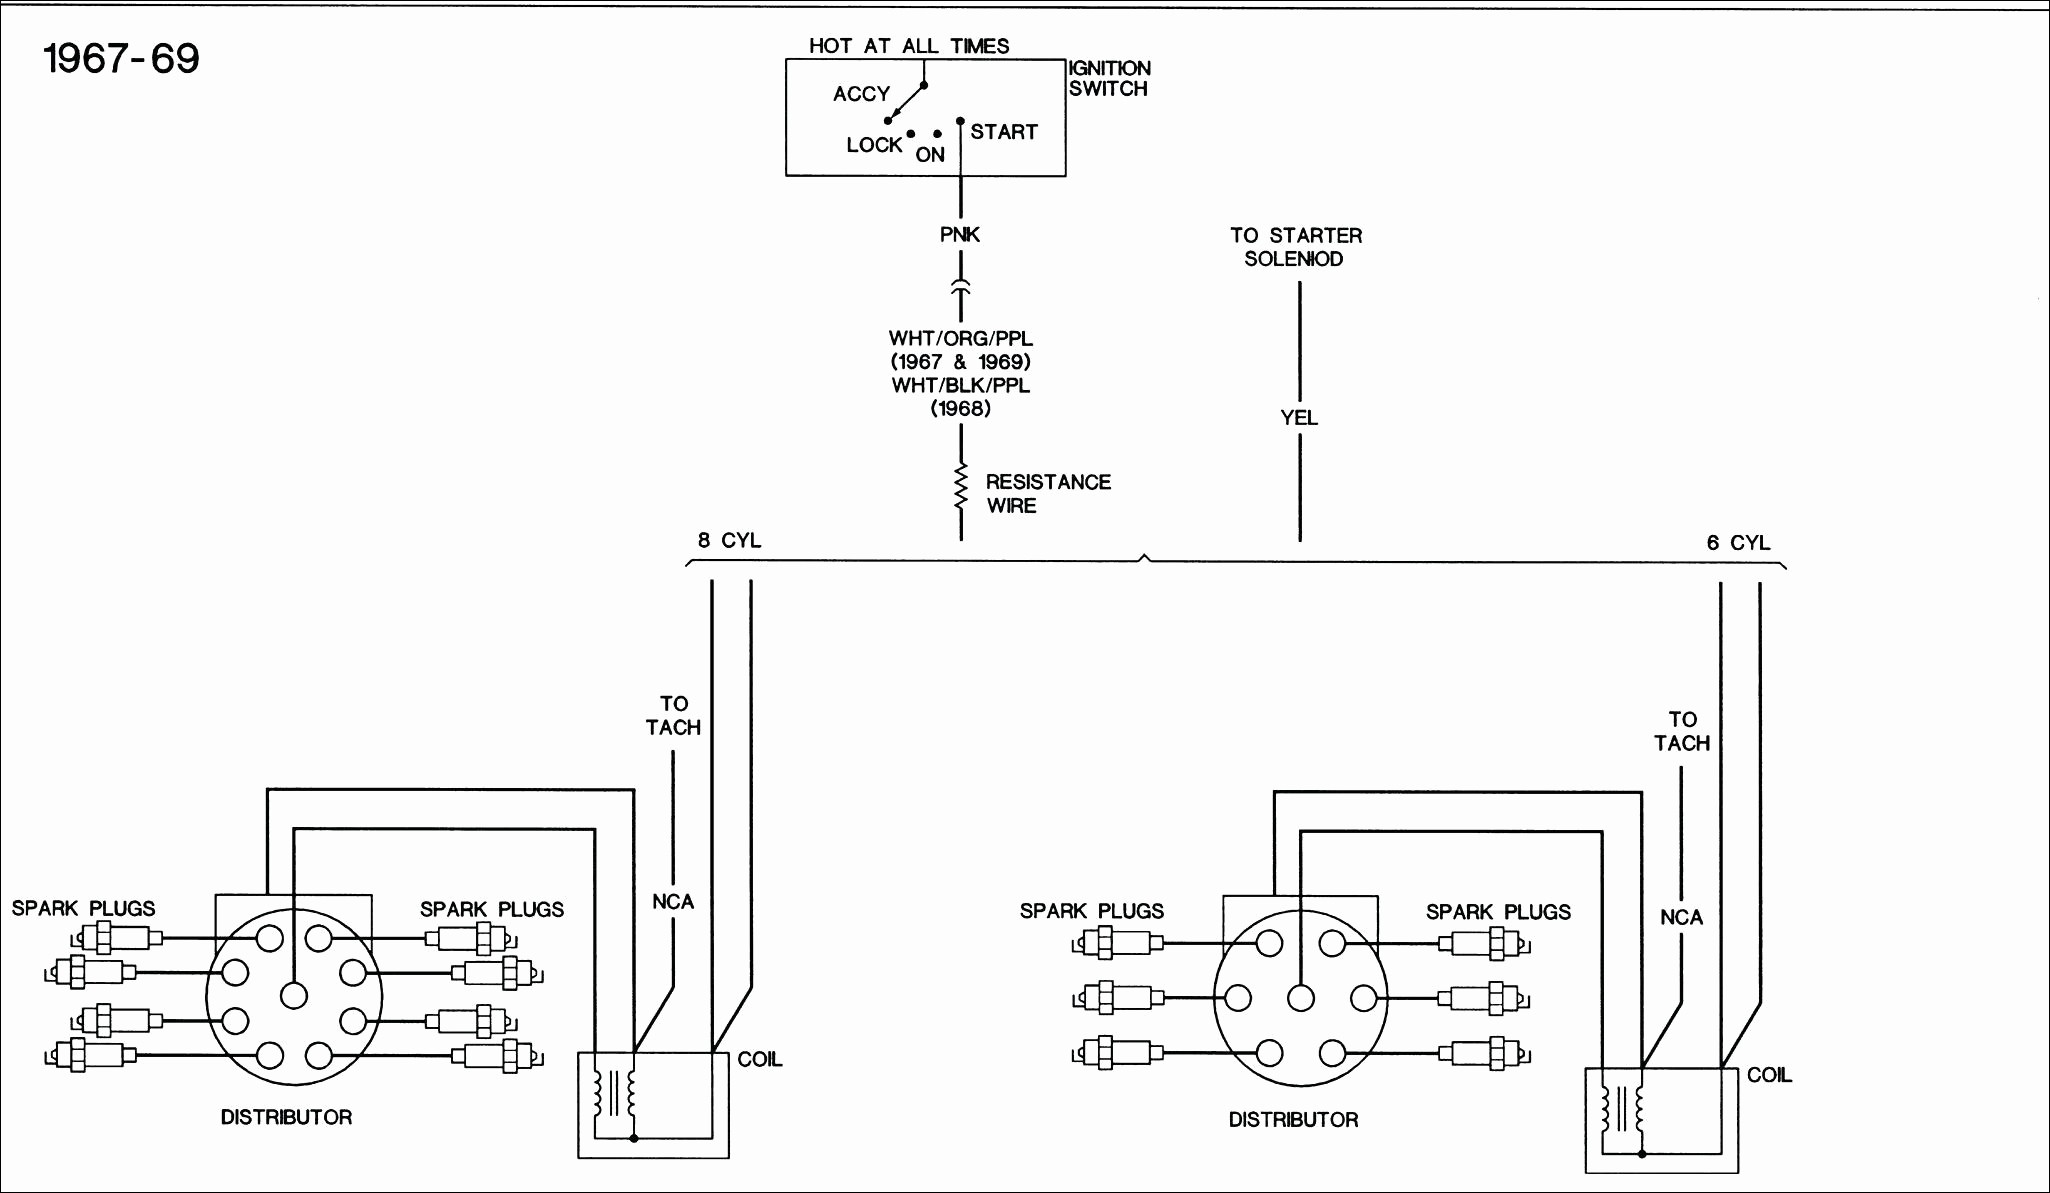 Car Ignition Wiring Diagram Distributor Wiring Diagram New Free Circuit Diagram Best Wiring Of Car Ignition Wiring Diagram